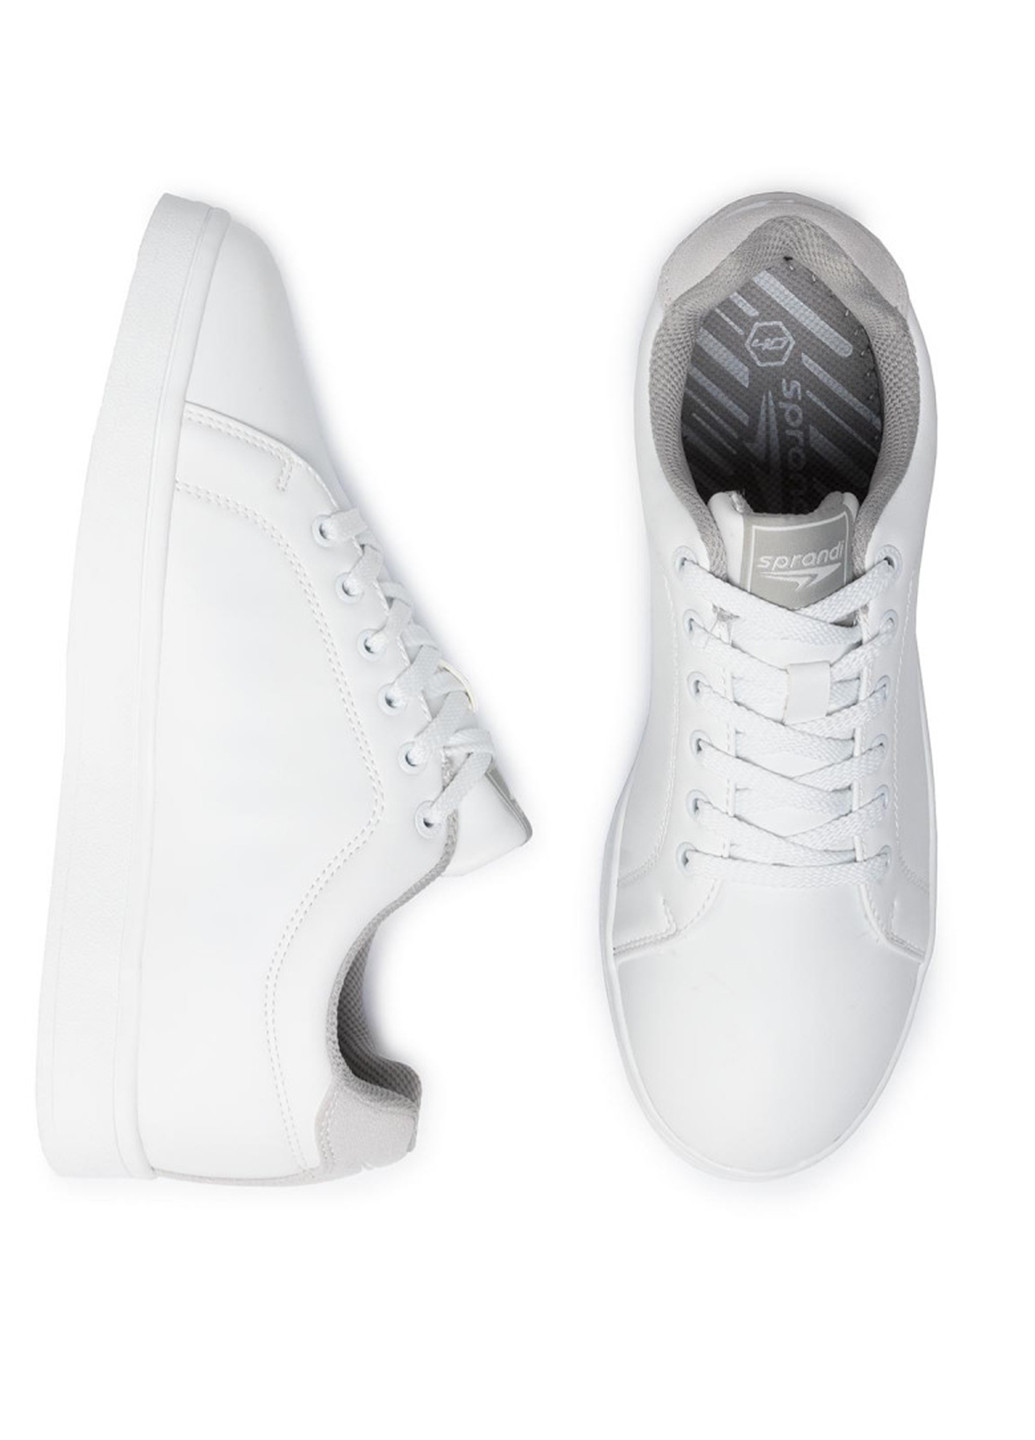 Белые демисезонные кросівки Sprandi MP07-181063-02